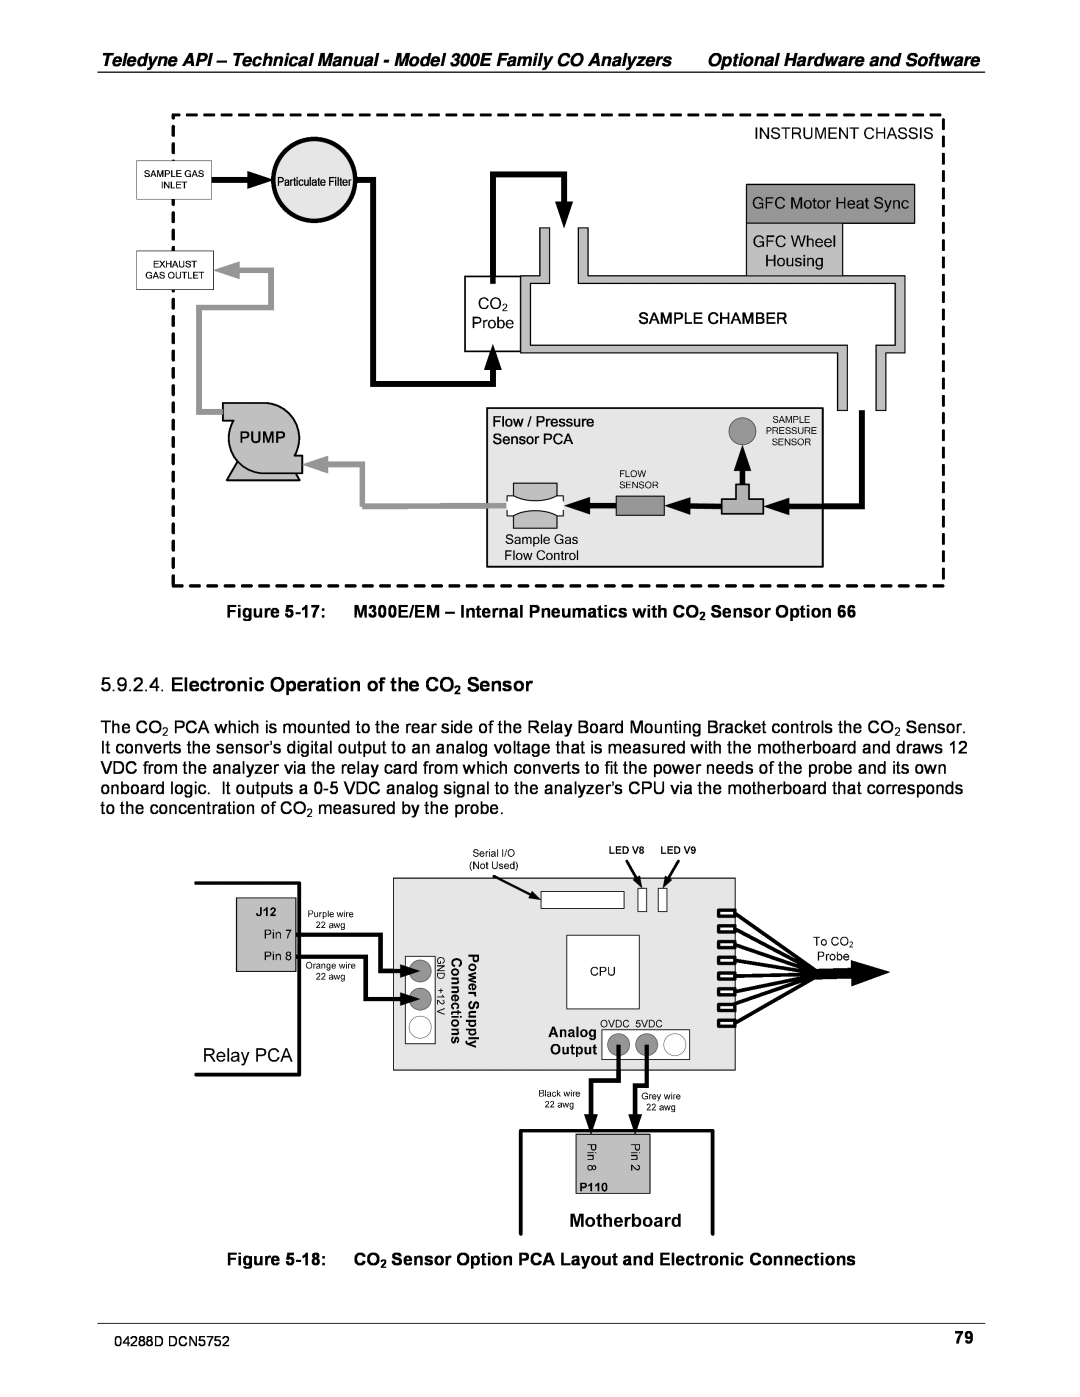 Teledyne M300EM operation manual Electronic Operation of the CO2 Sensor 